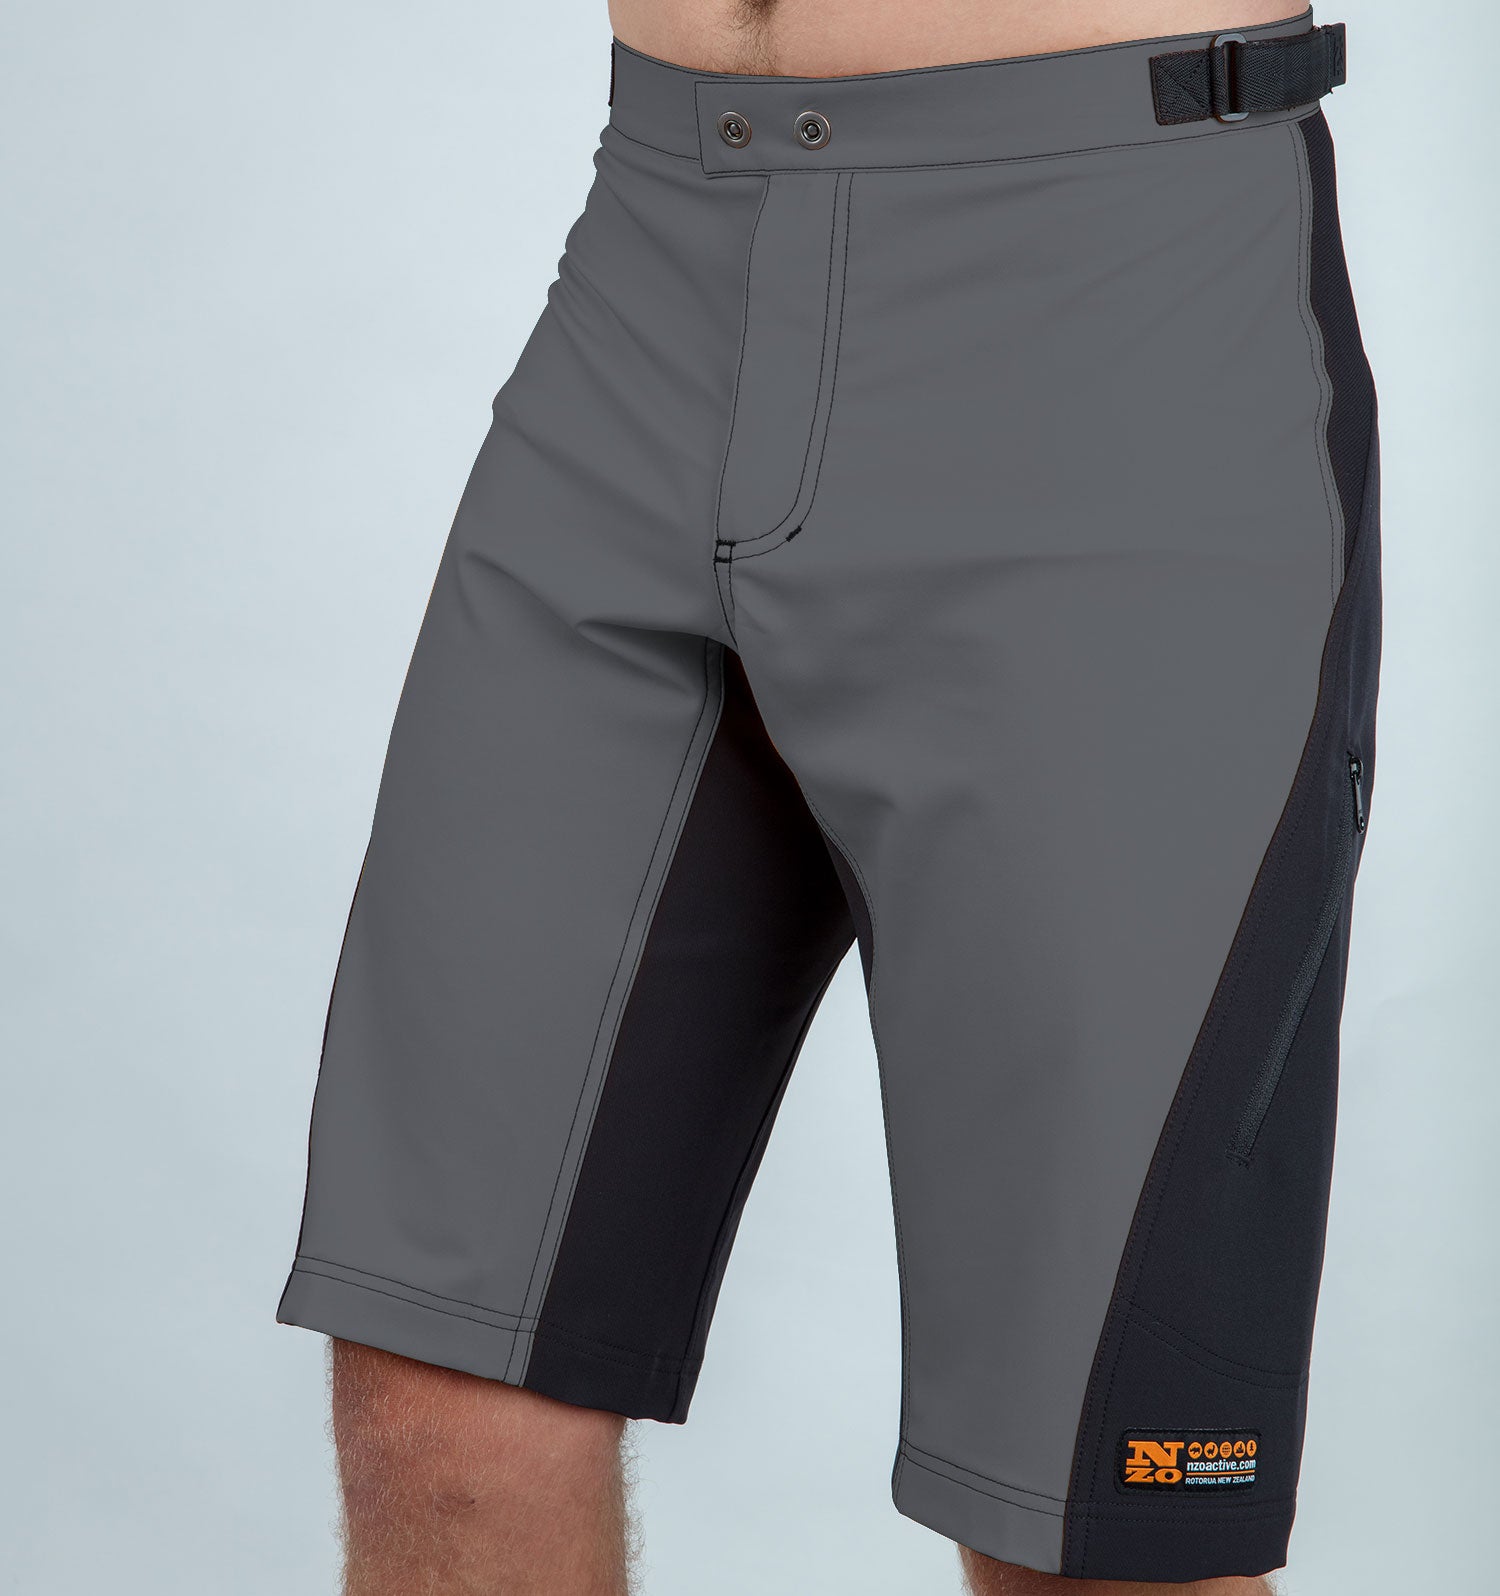 Burners - Men trail shorts - Charcoal/Black